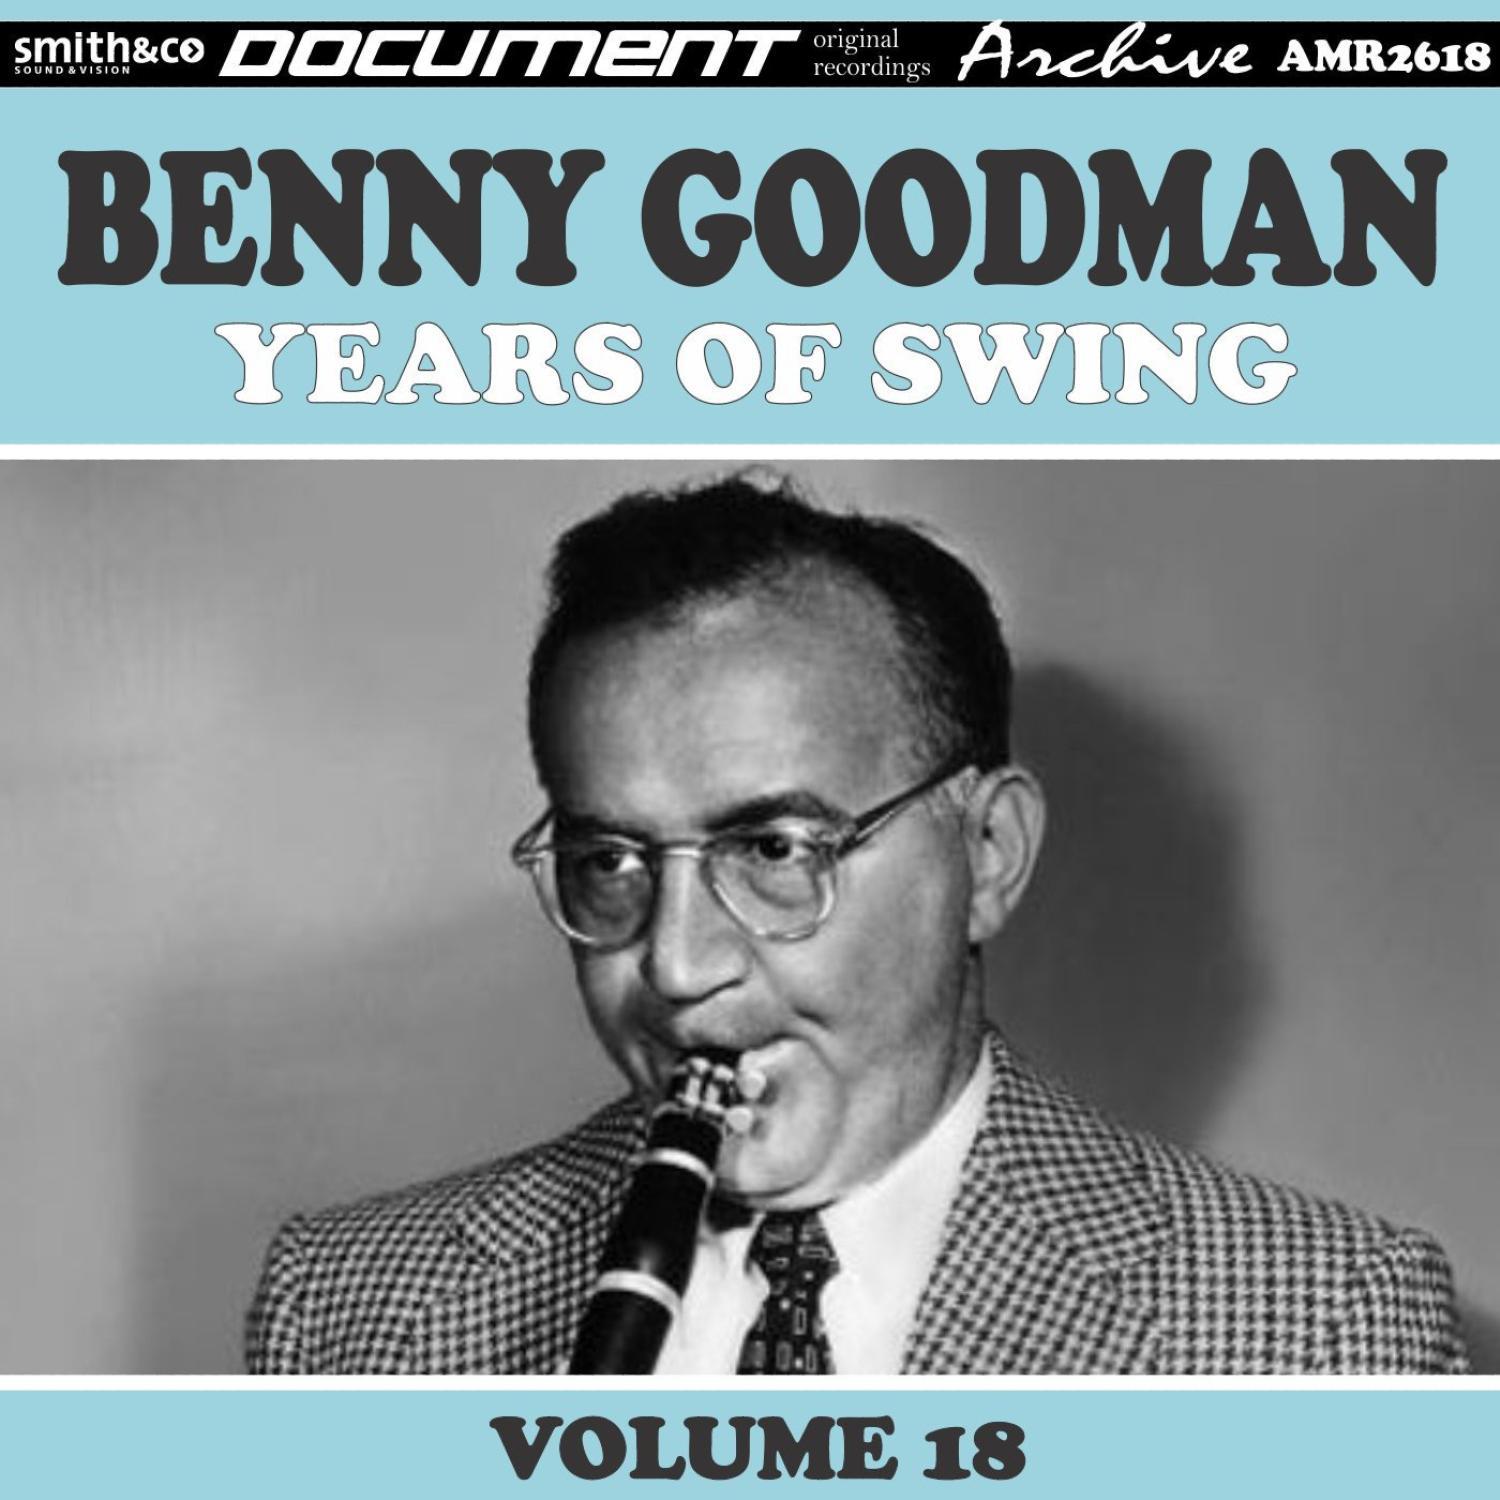 Benny Goodman, Vol. 18 (Breakfast Ball 'The 1934 Sessions')